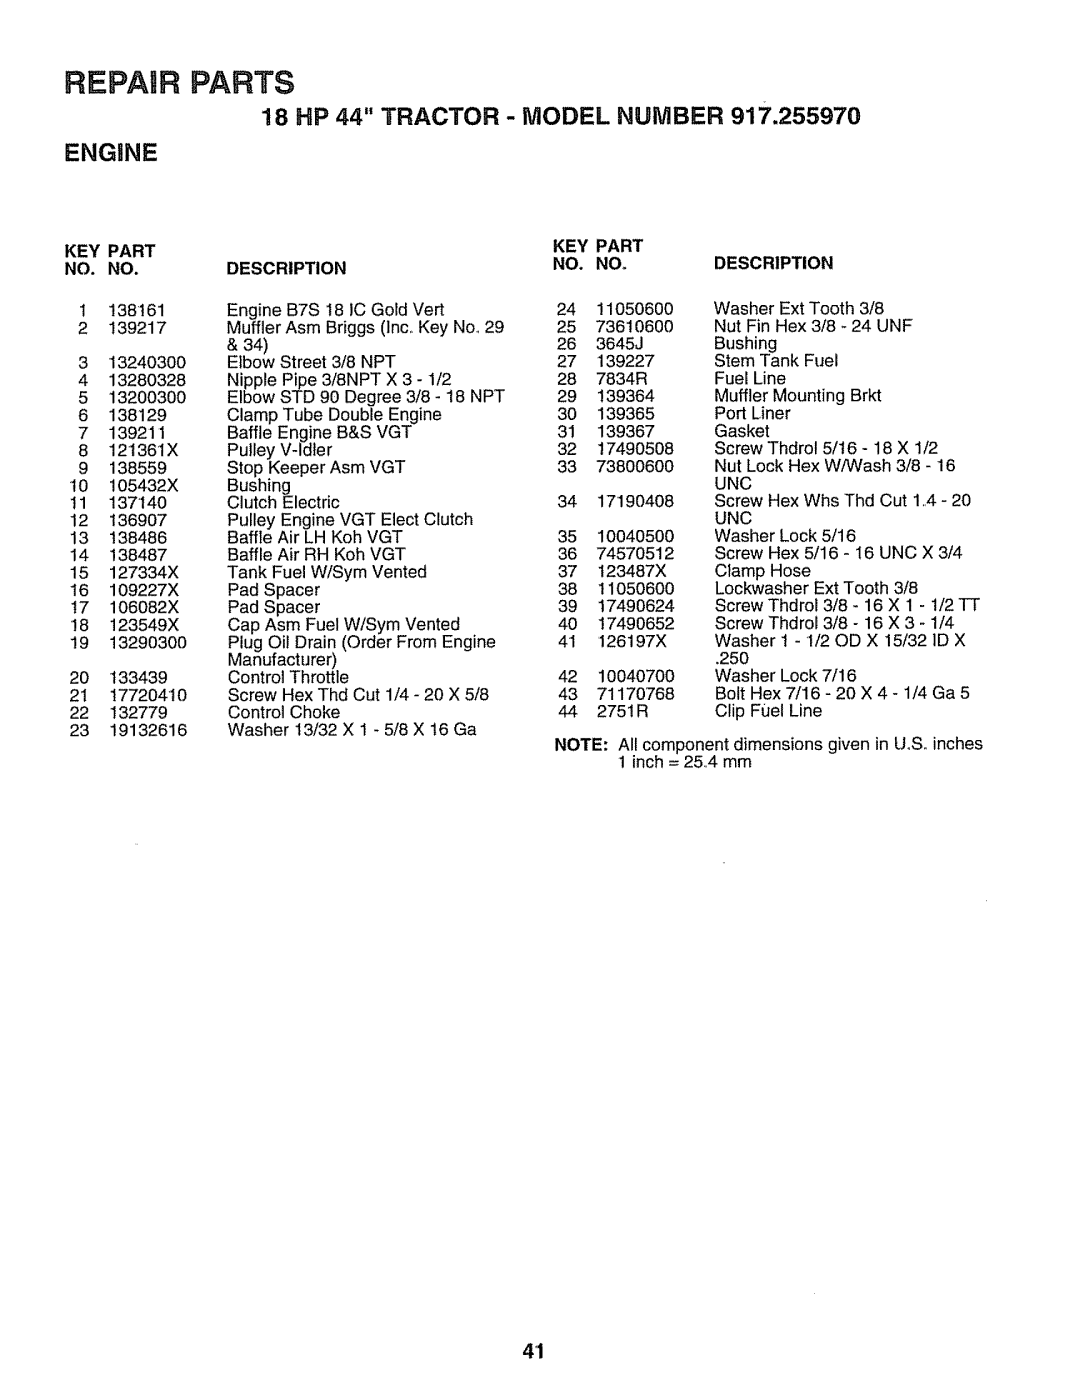 Sears 917.25597 owner manual Repair Parts, 18 HP 44 TRACTOR - MODEL NUMBER ENGINE, Description 